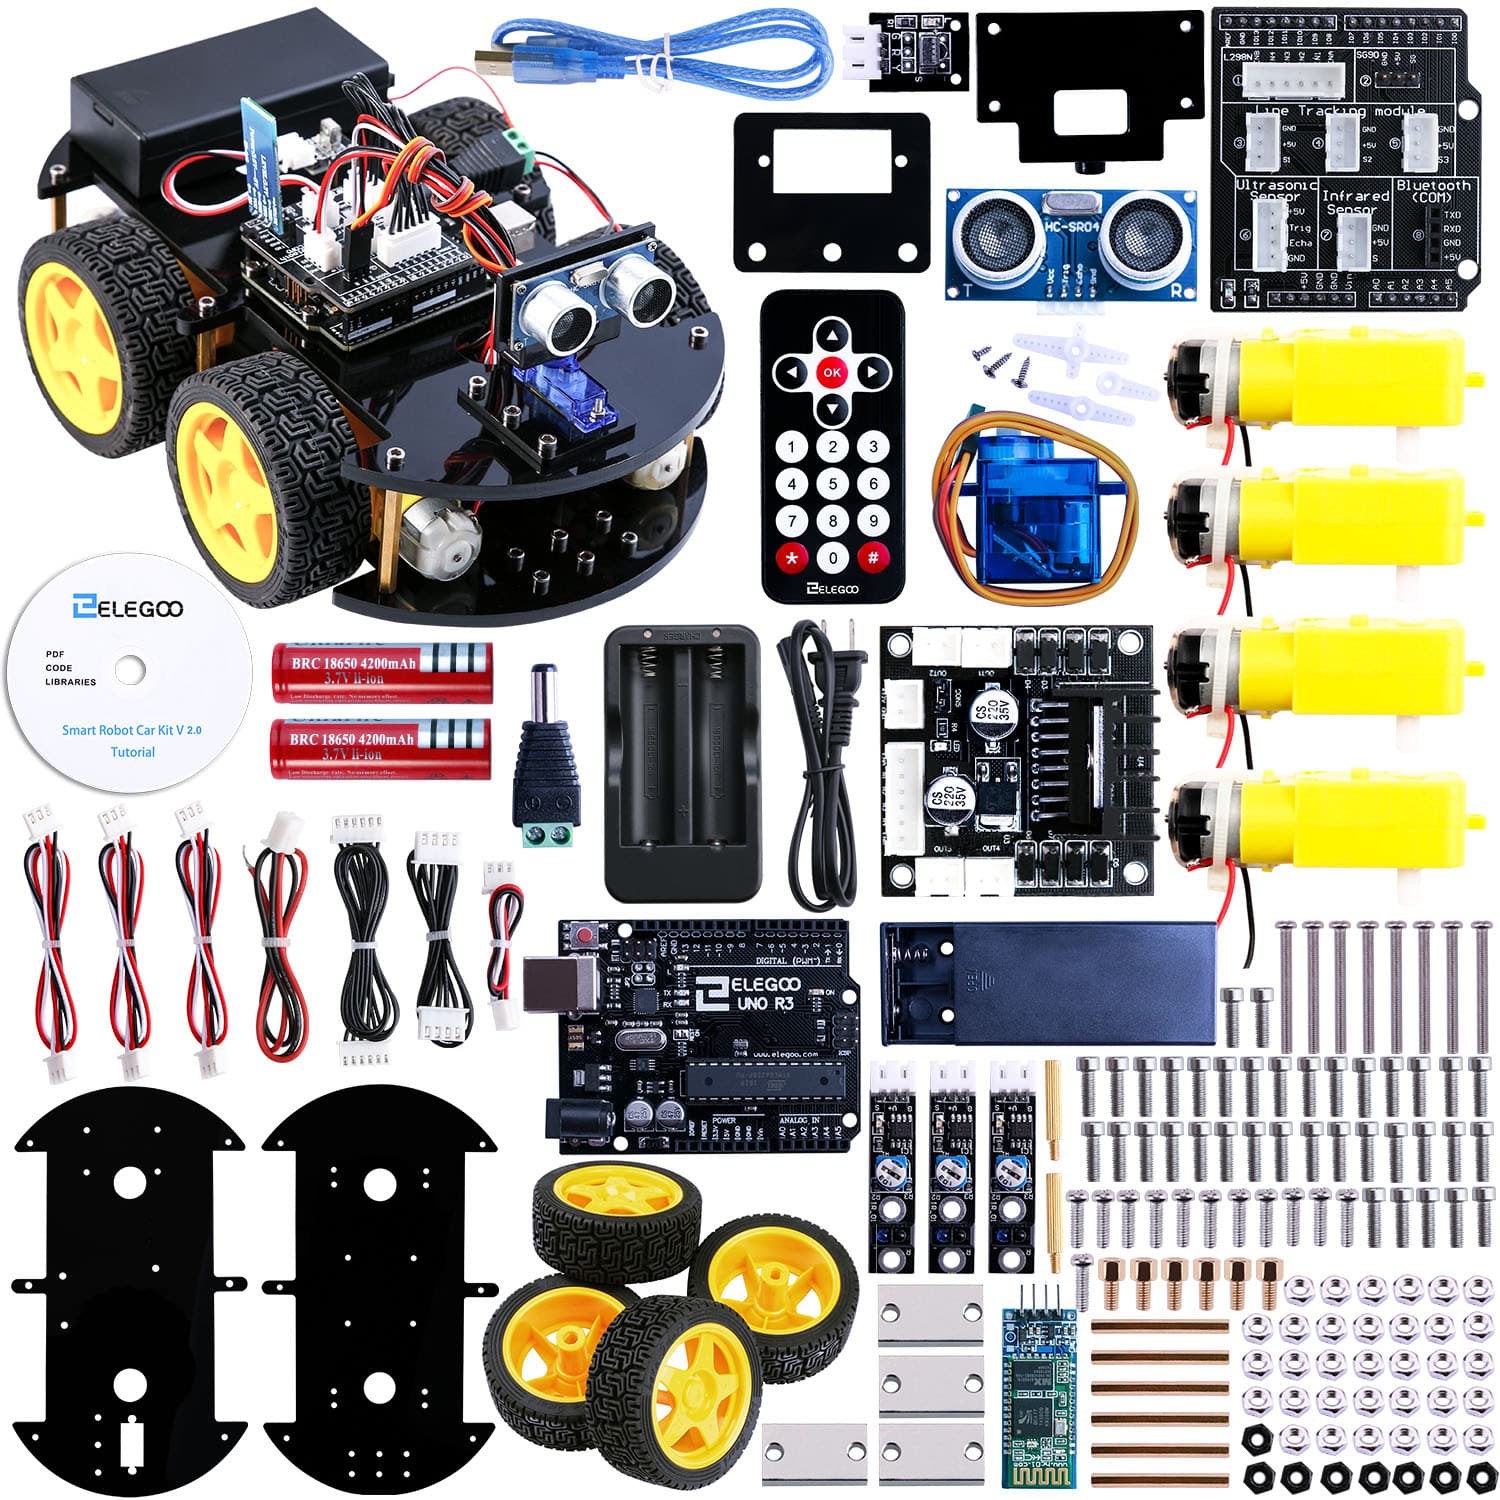 DIY robot kits for kids